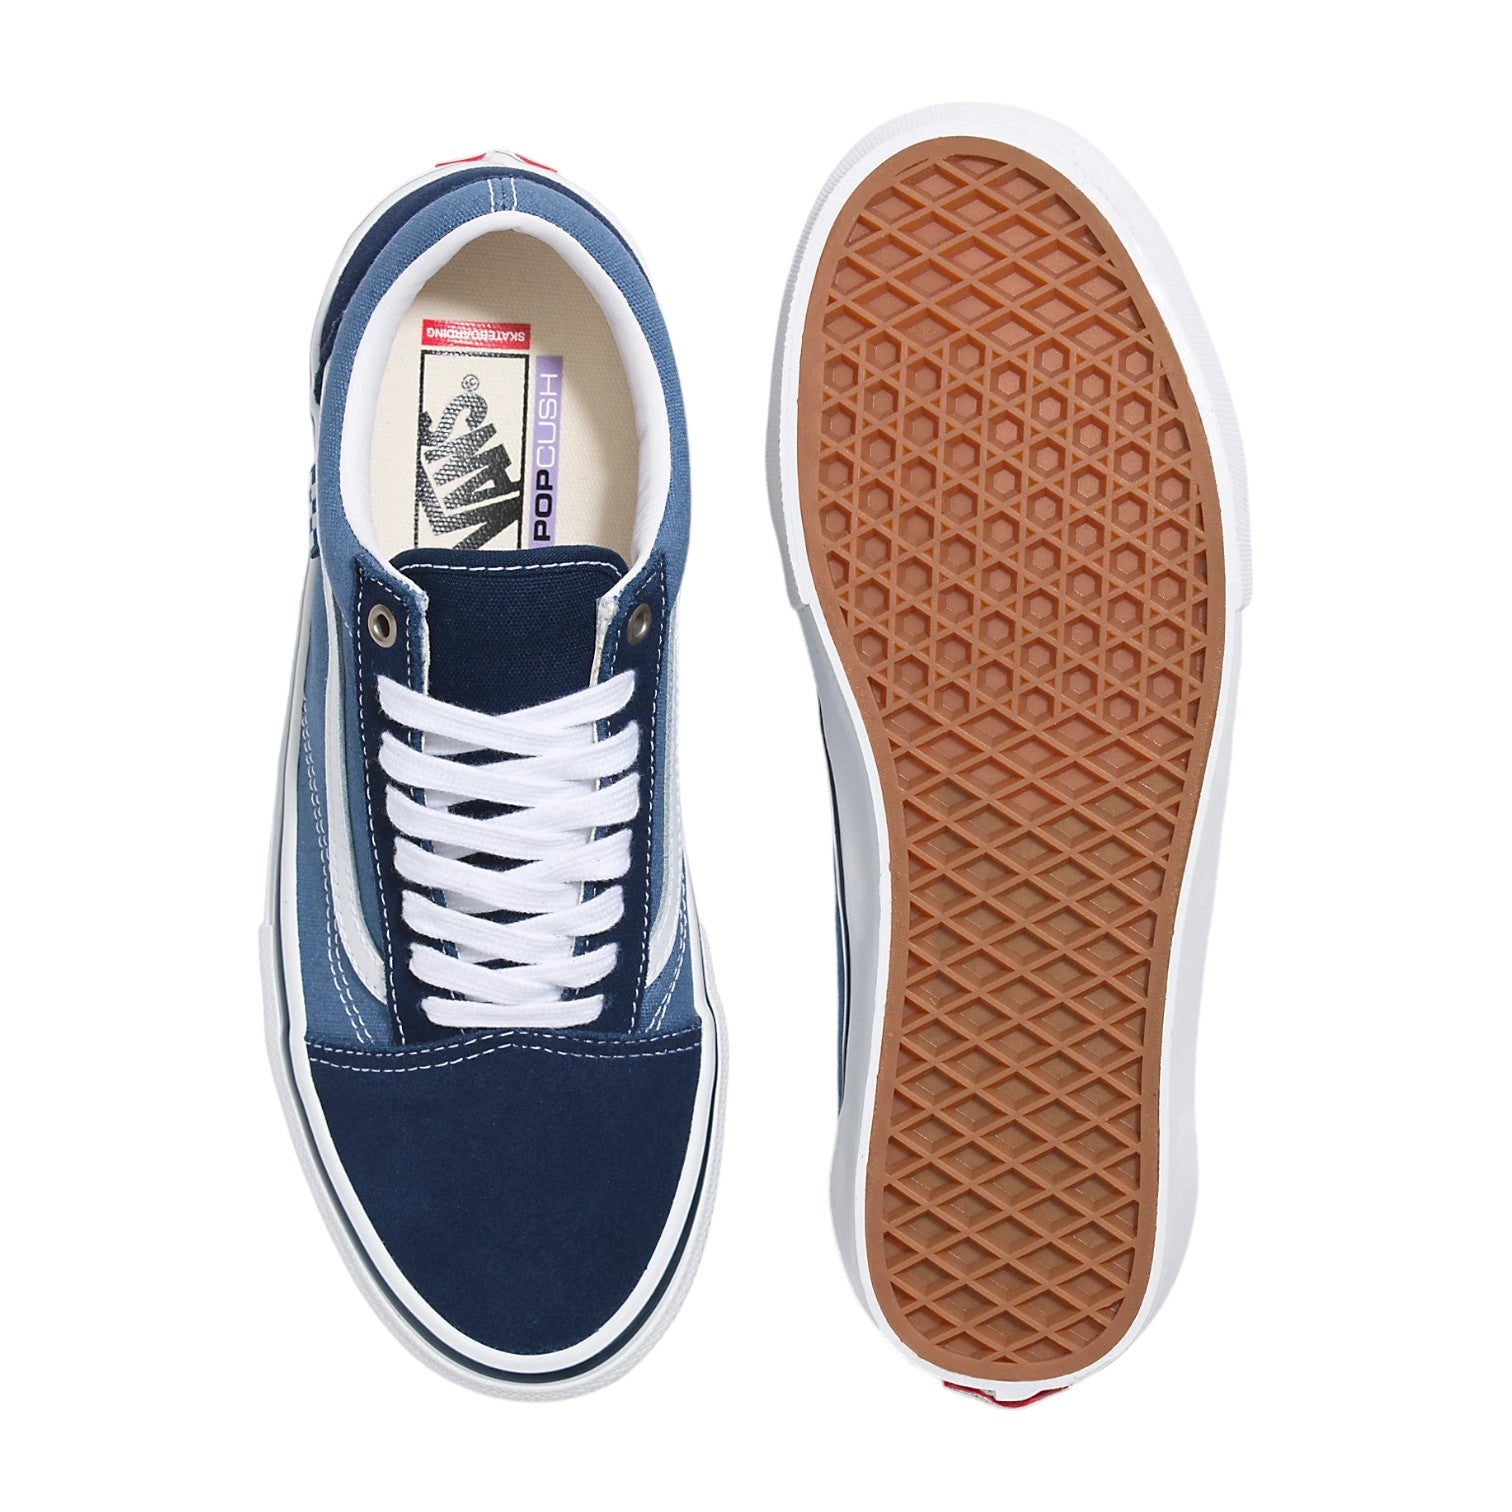 Vans Skate Old Skool Shoes - Navy/White